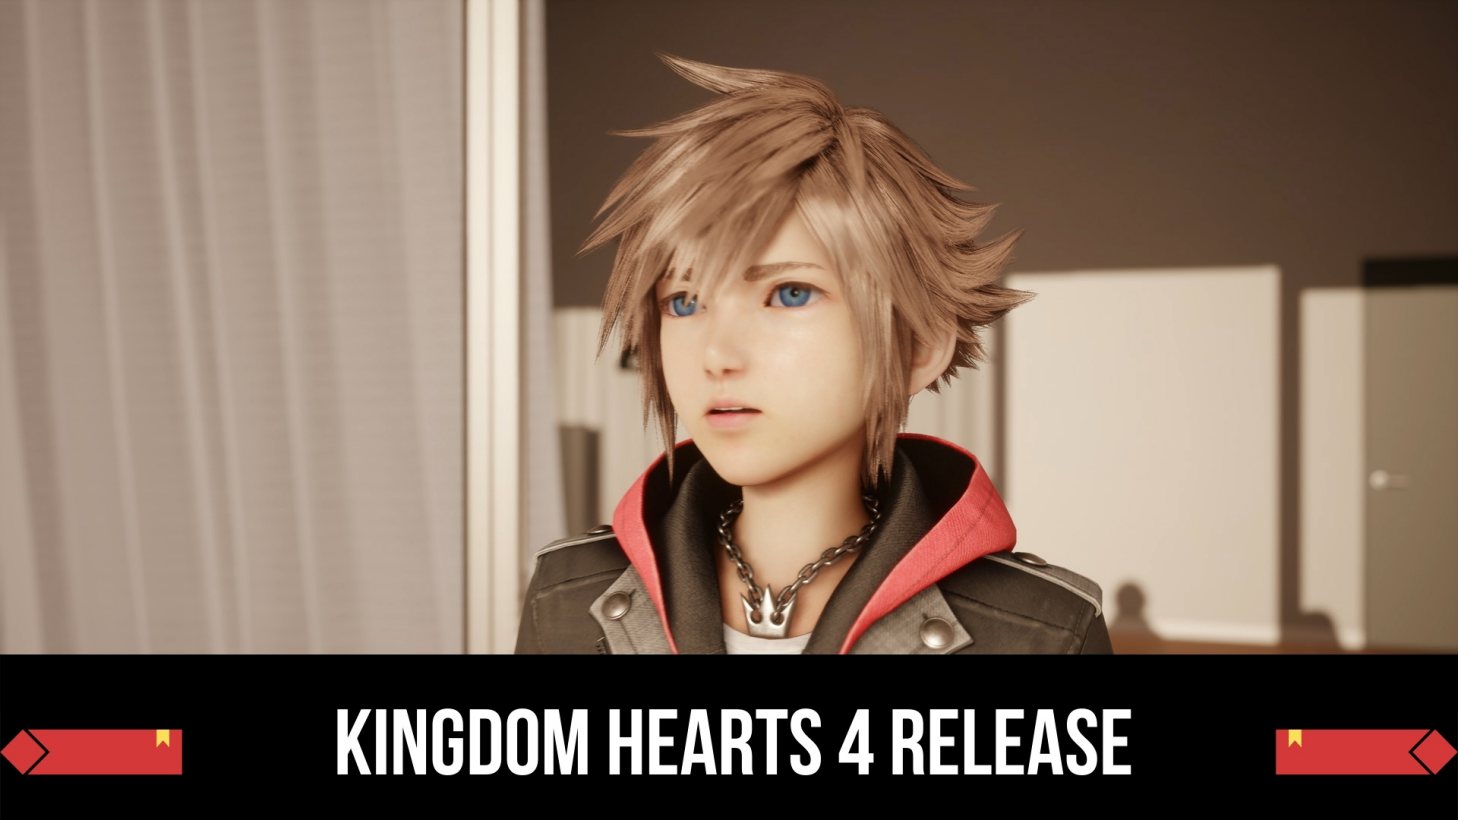 Kingdom Hearts 4 Release Date, Gameplay, Platforms, Trailer & More Updates